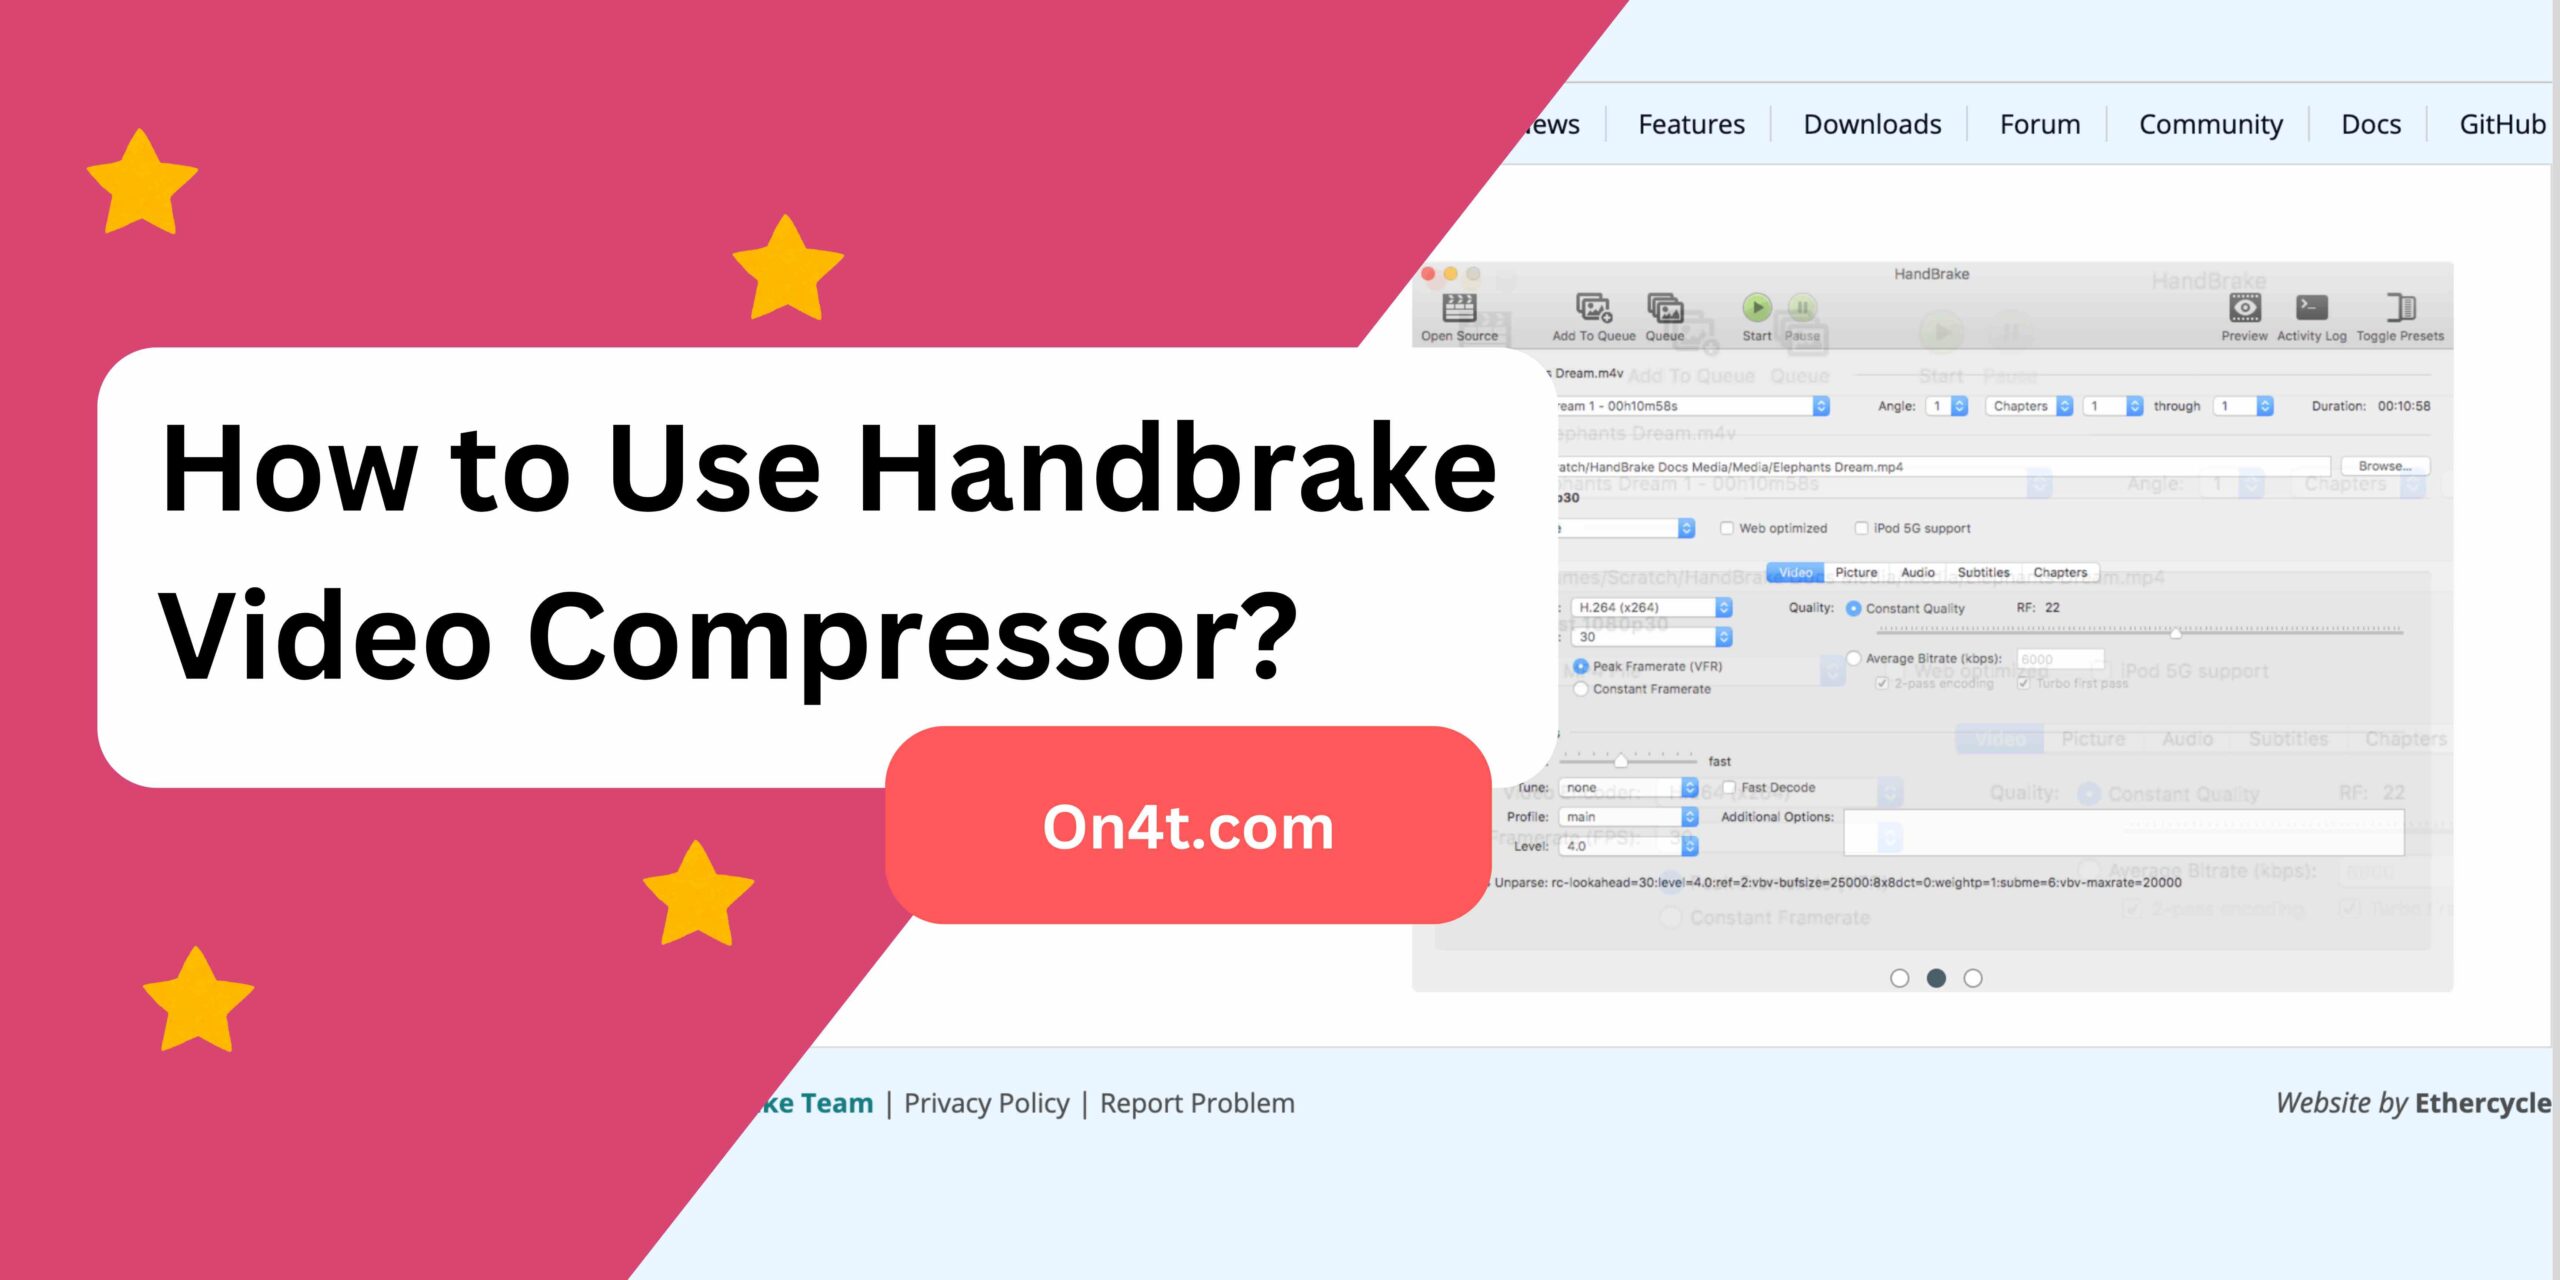 How to Use Handbrake Video Compressor?